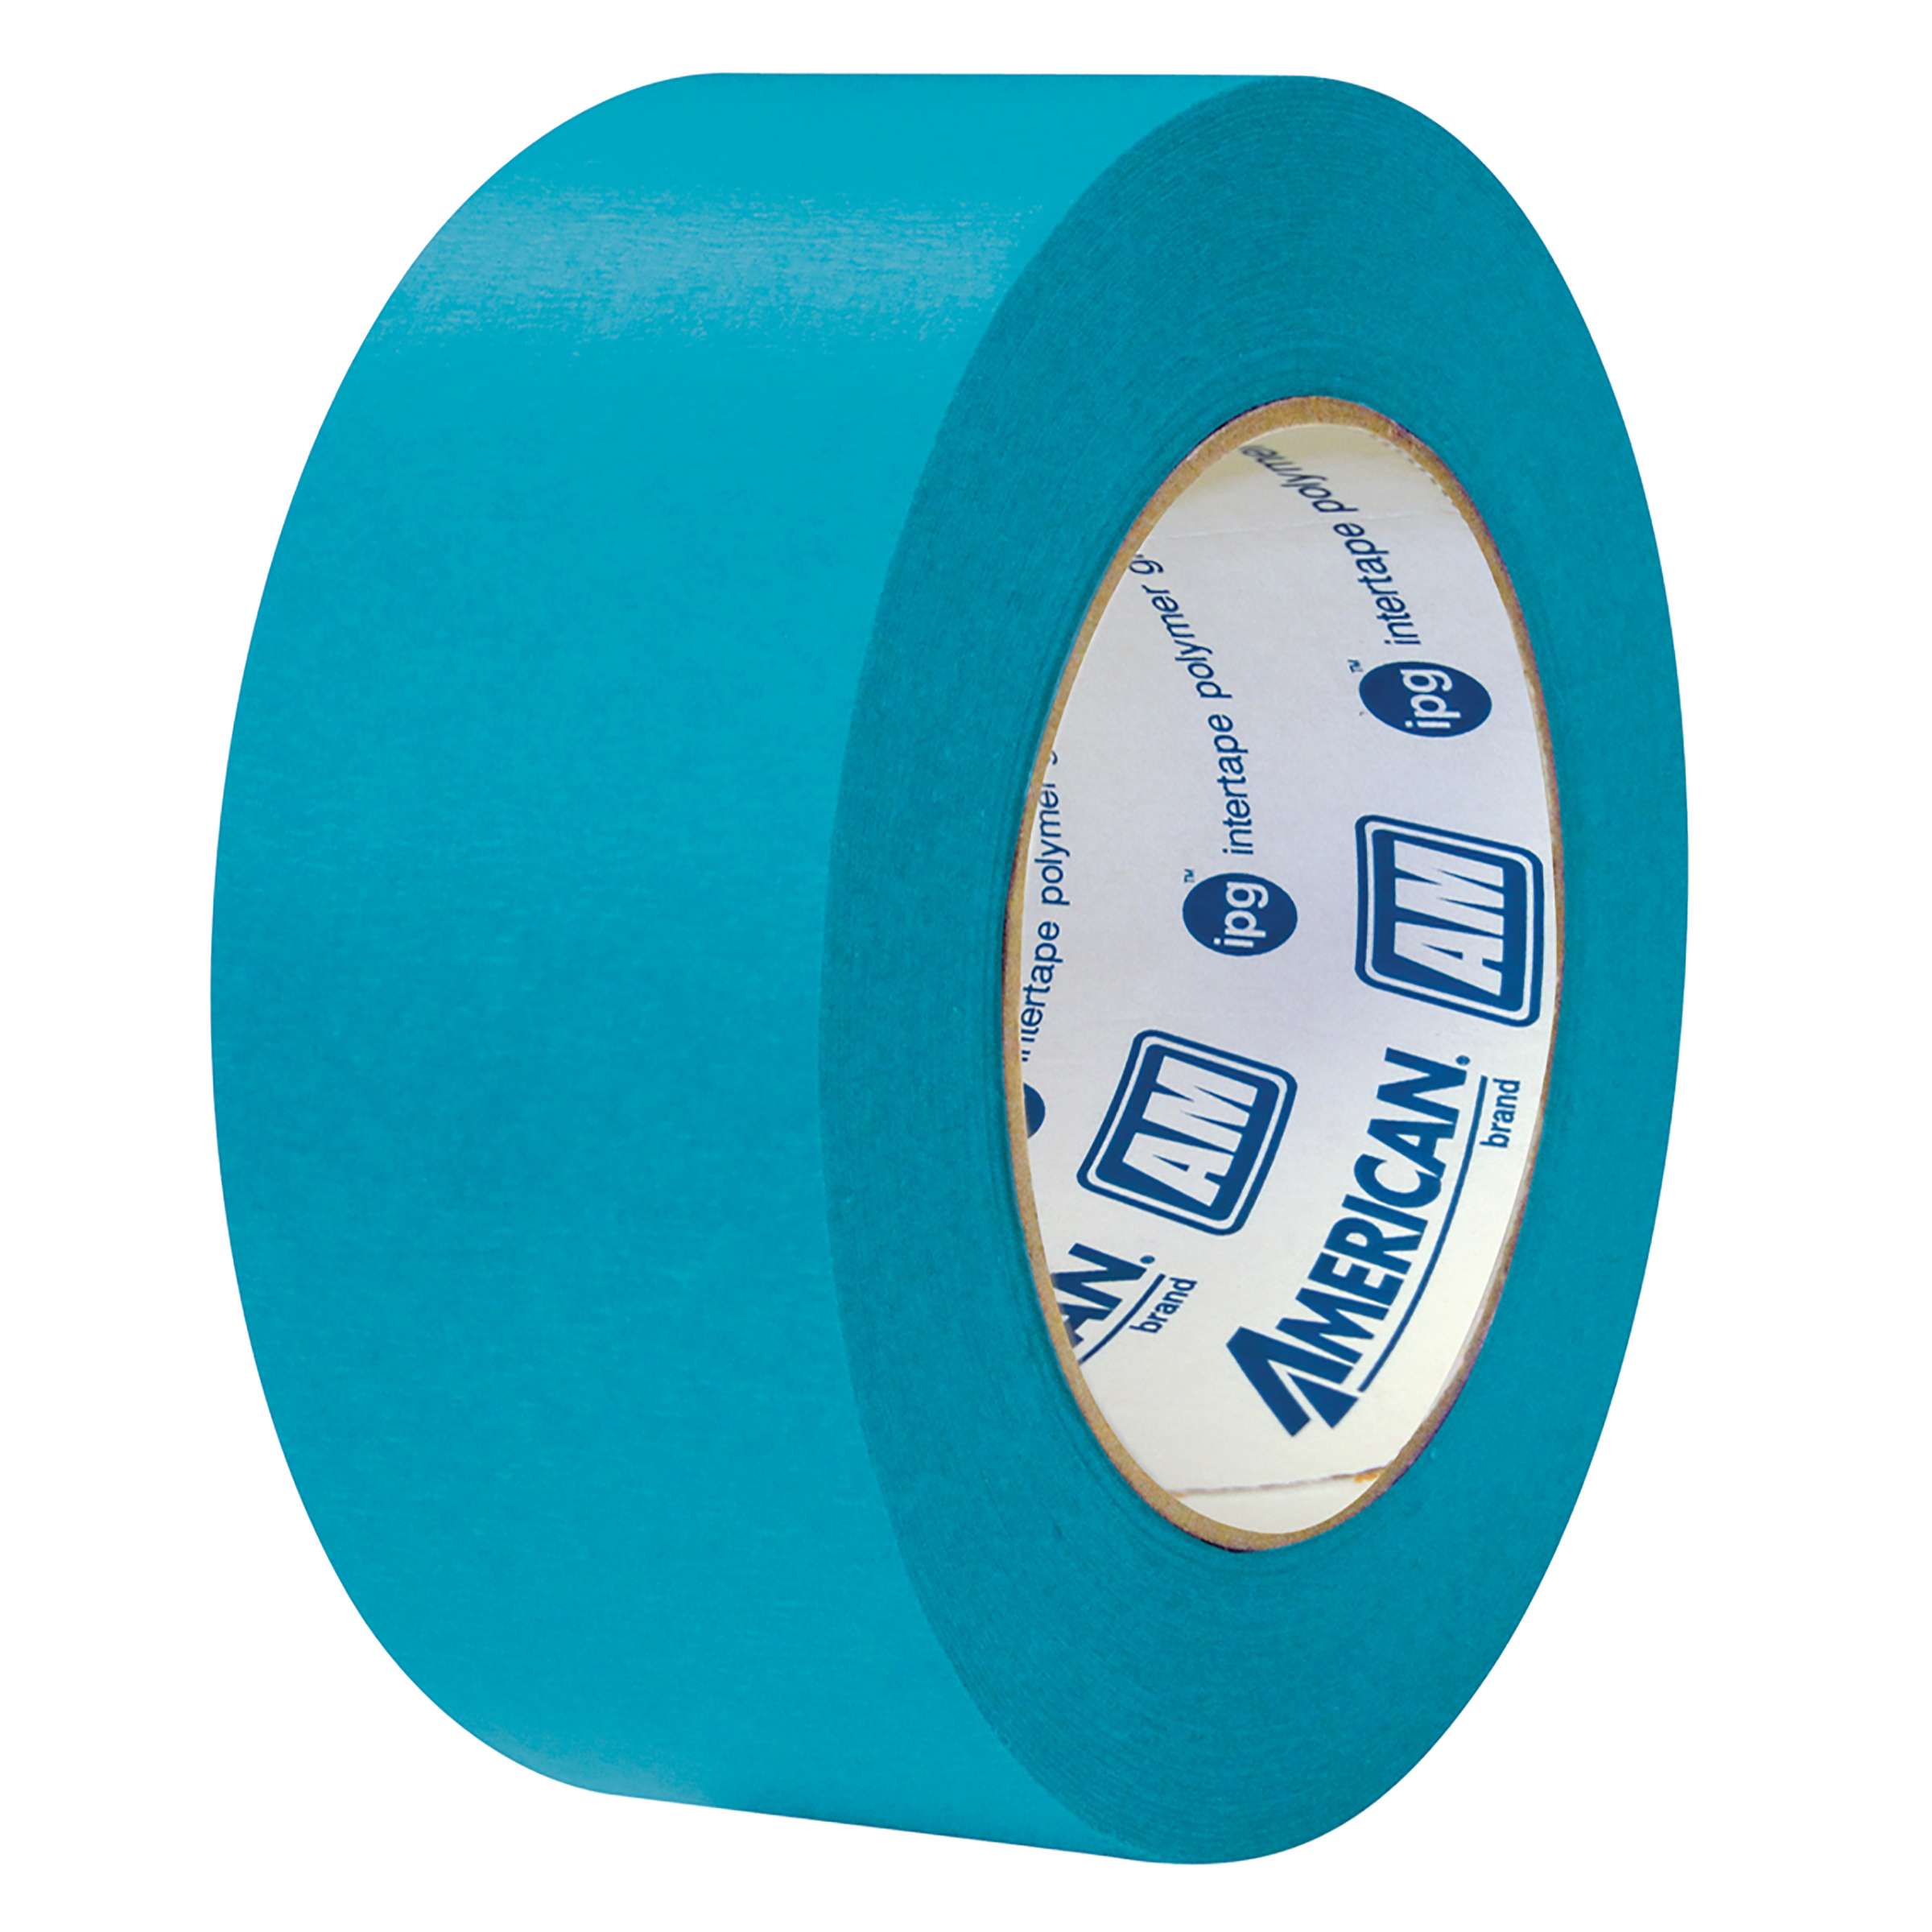 Waterproof high temperature masking tape